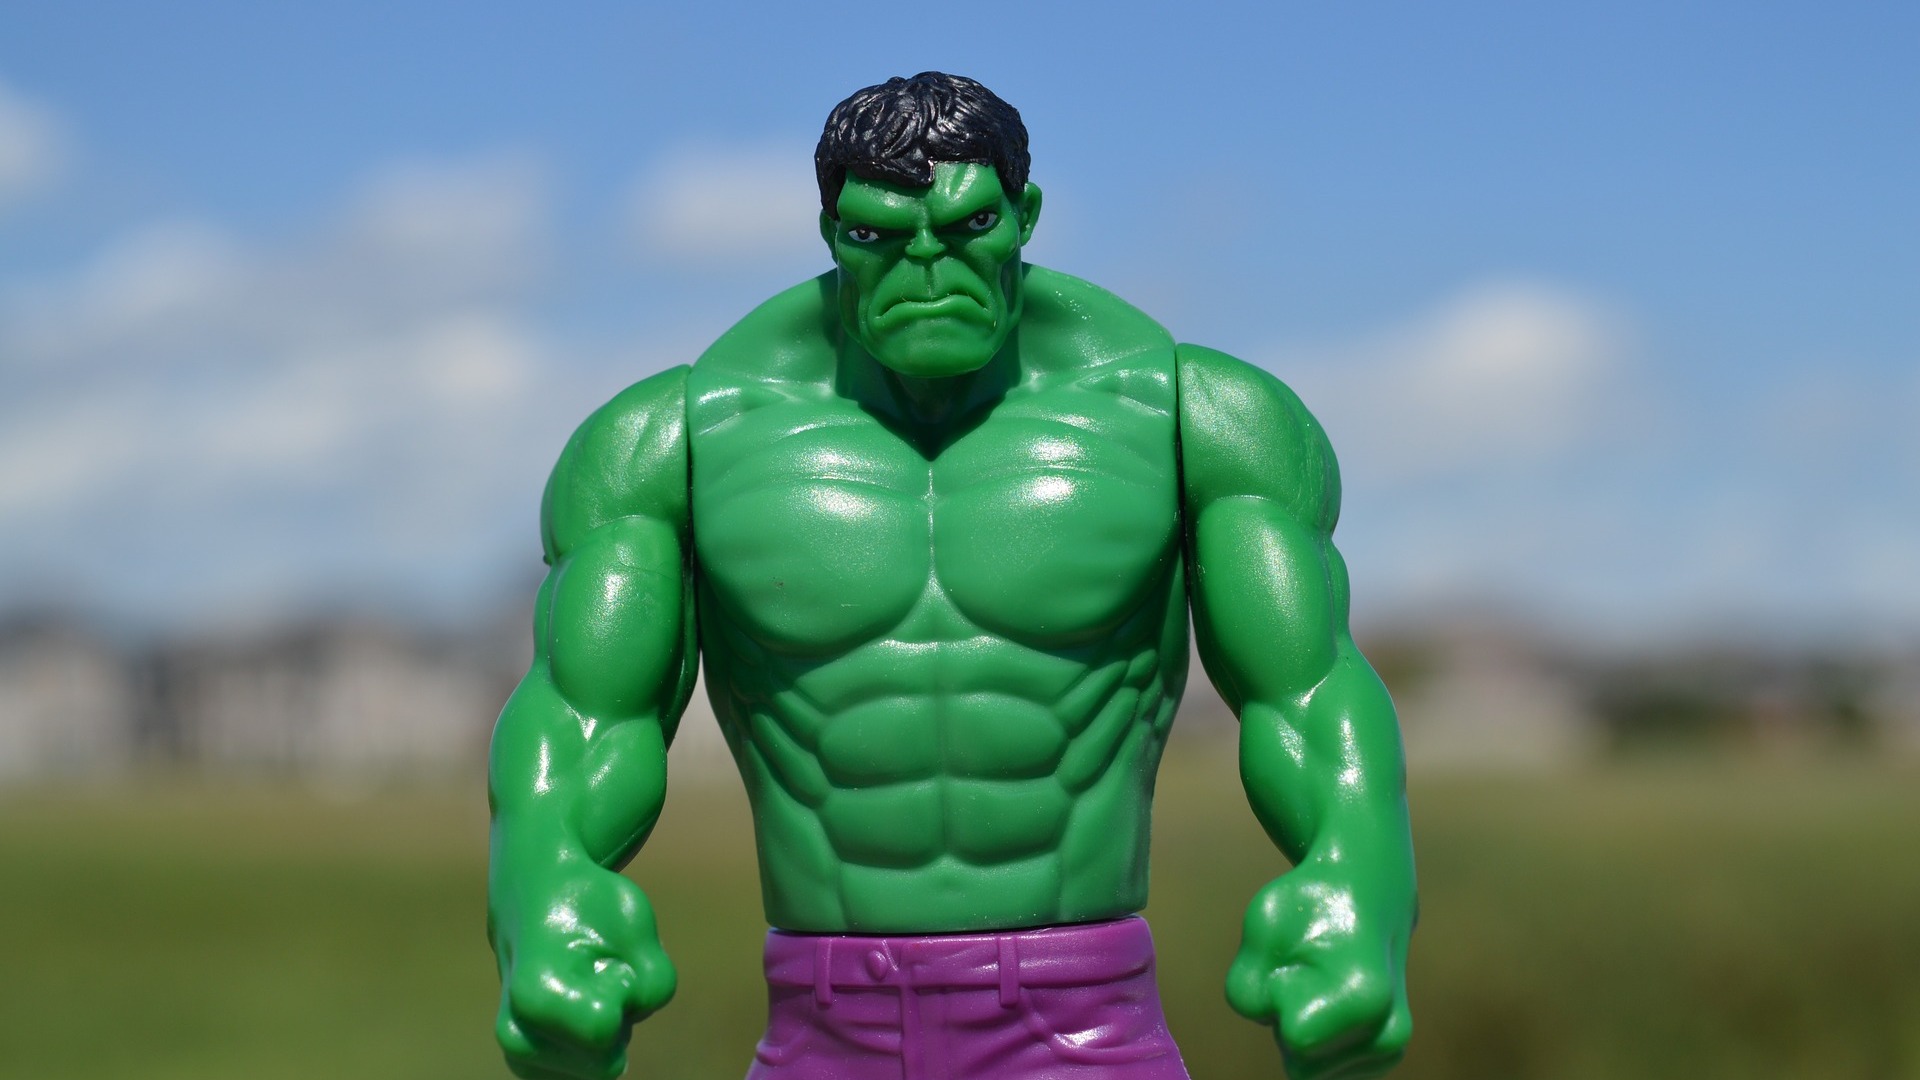 An Incredible Hulk toy